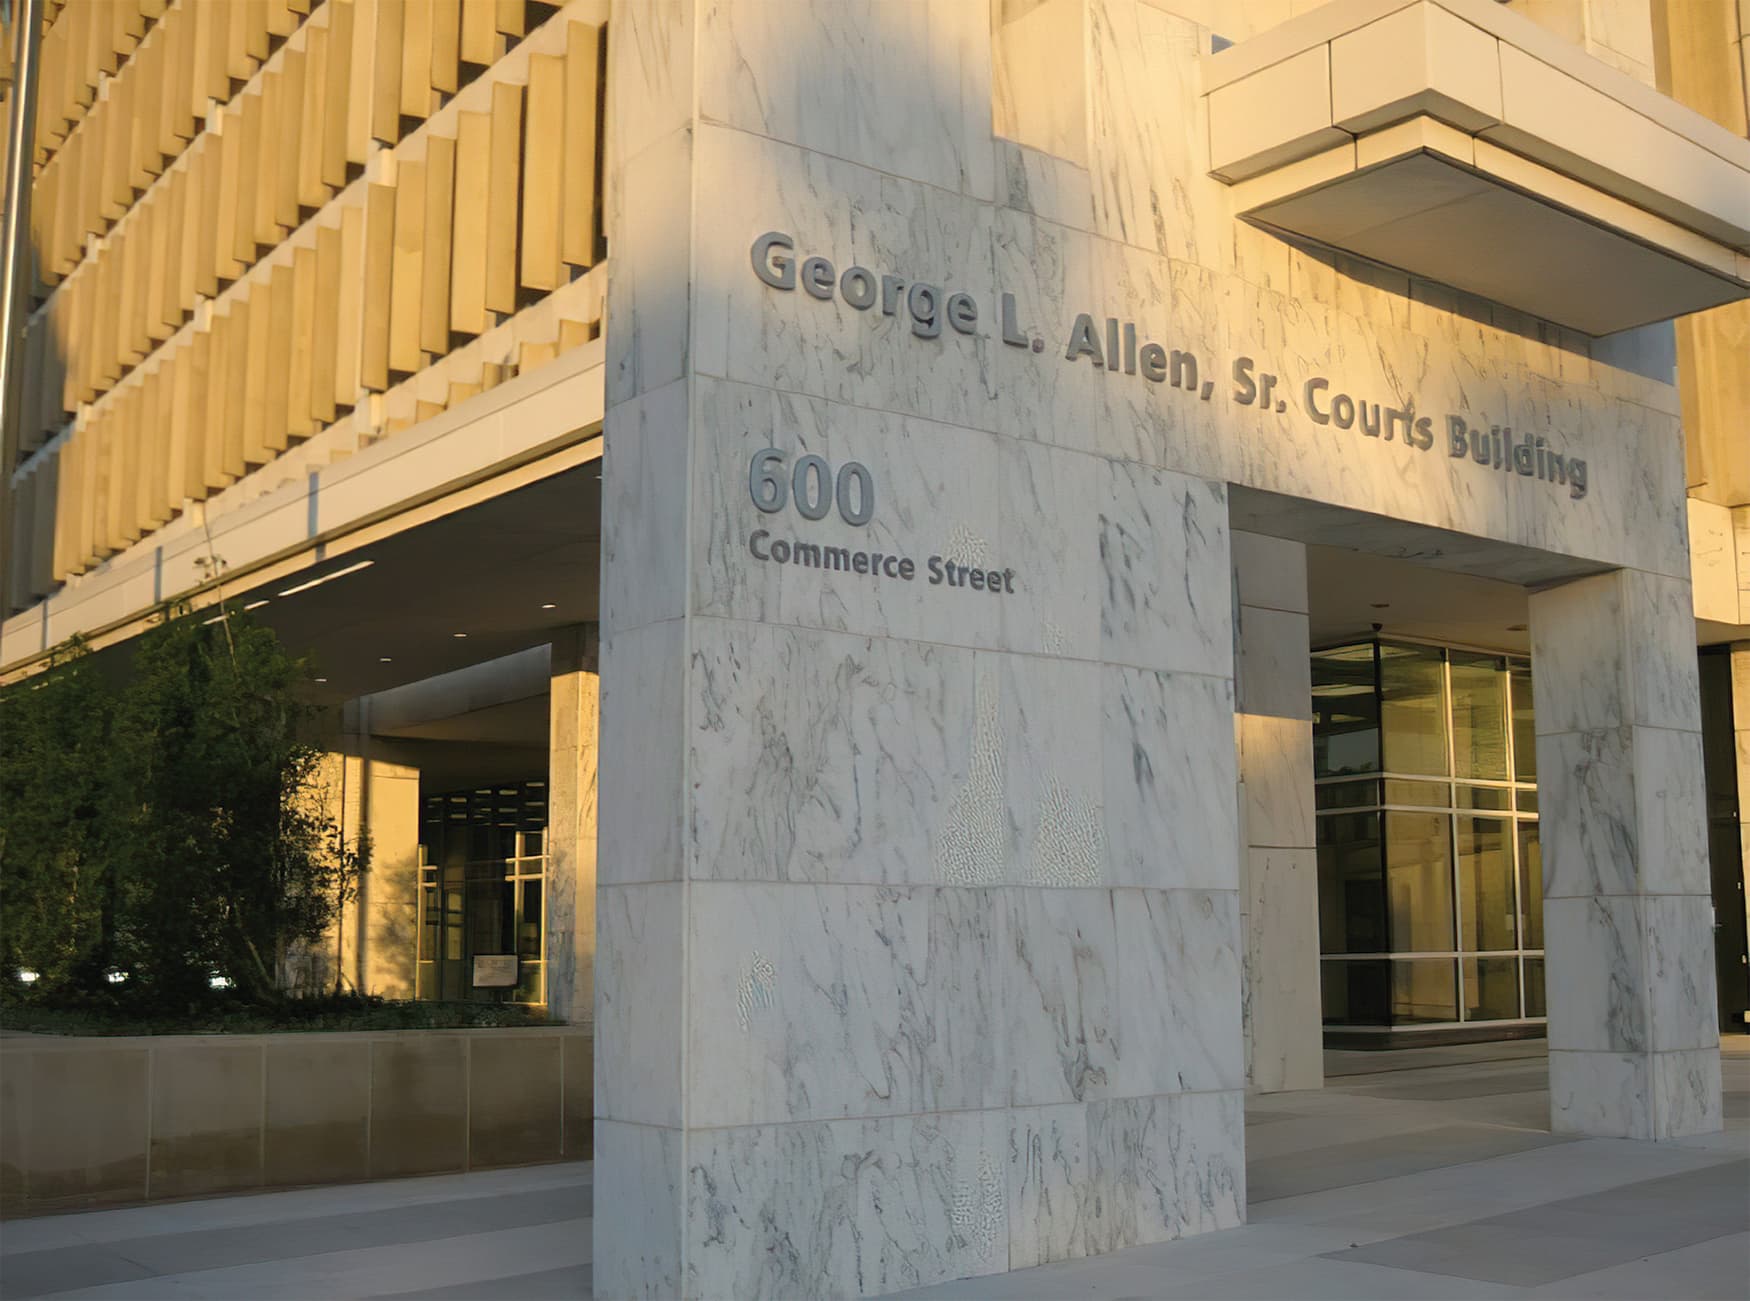 George L. Allen Sr. Courts Building. Civic Design, Workplace Design. Dallas, Texas. Fascia Signage.